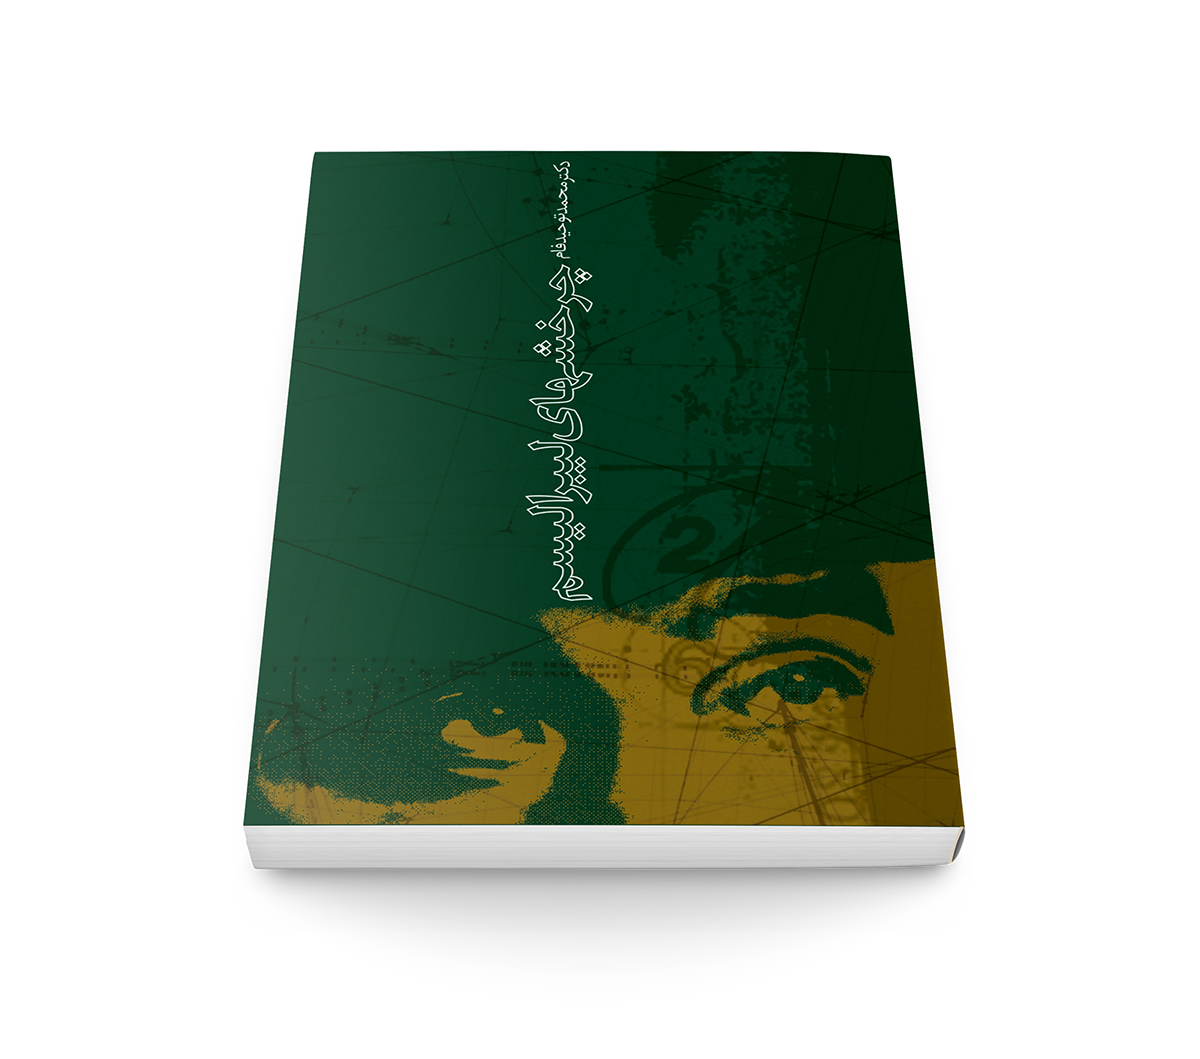 liberalism فارسی ایرانی ایران کتاب روزنه تایپوگرافی جلد گرافیک طراحی پارسا بهشتی شیرازی